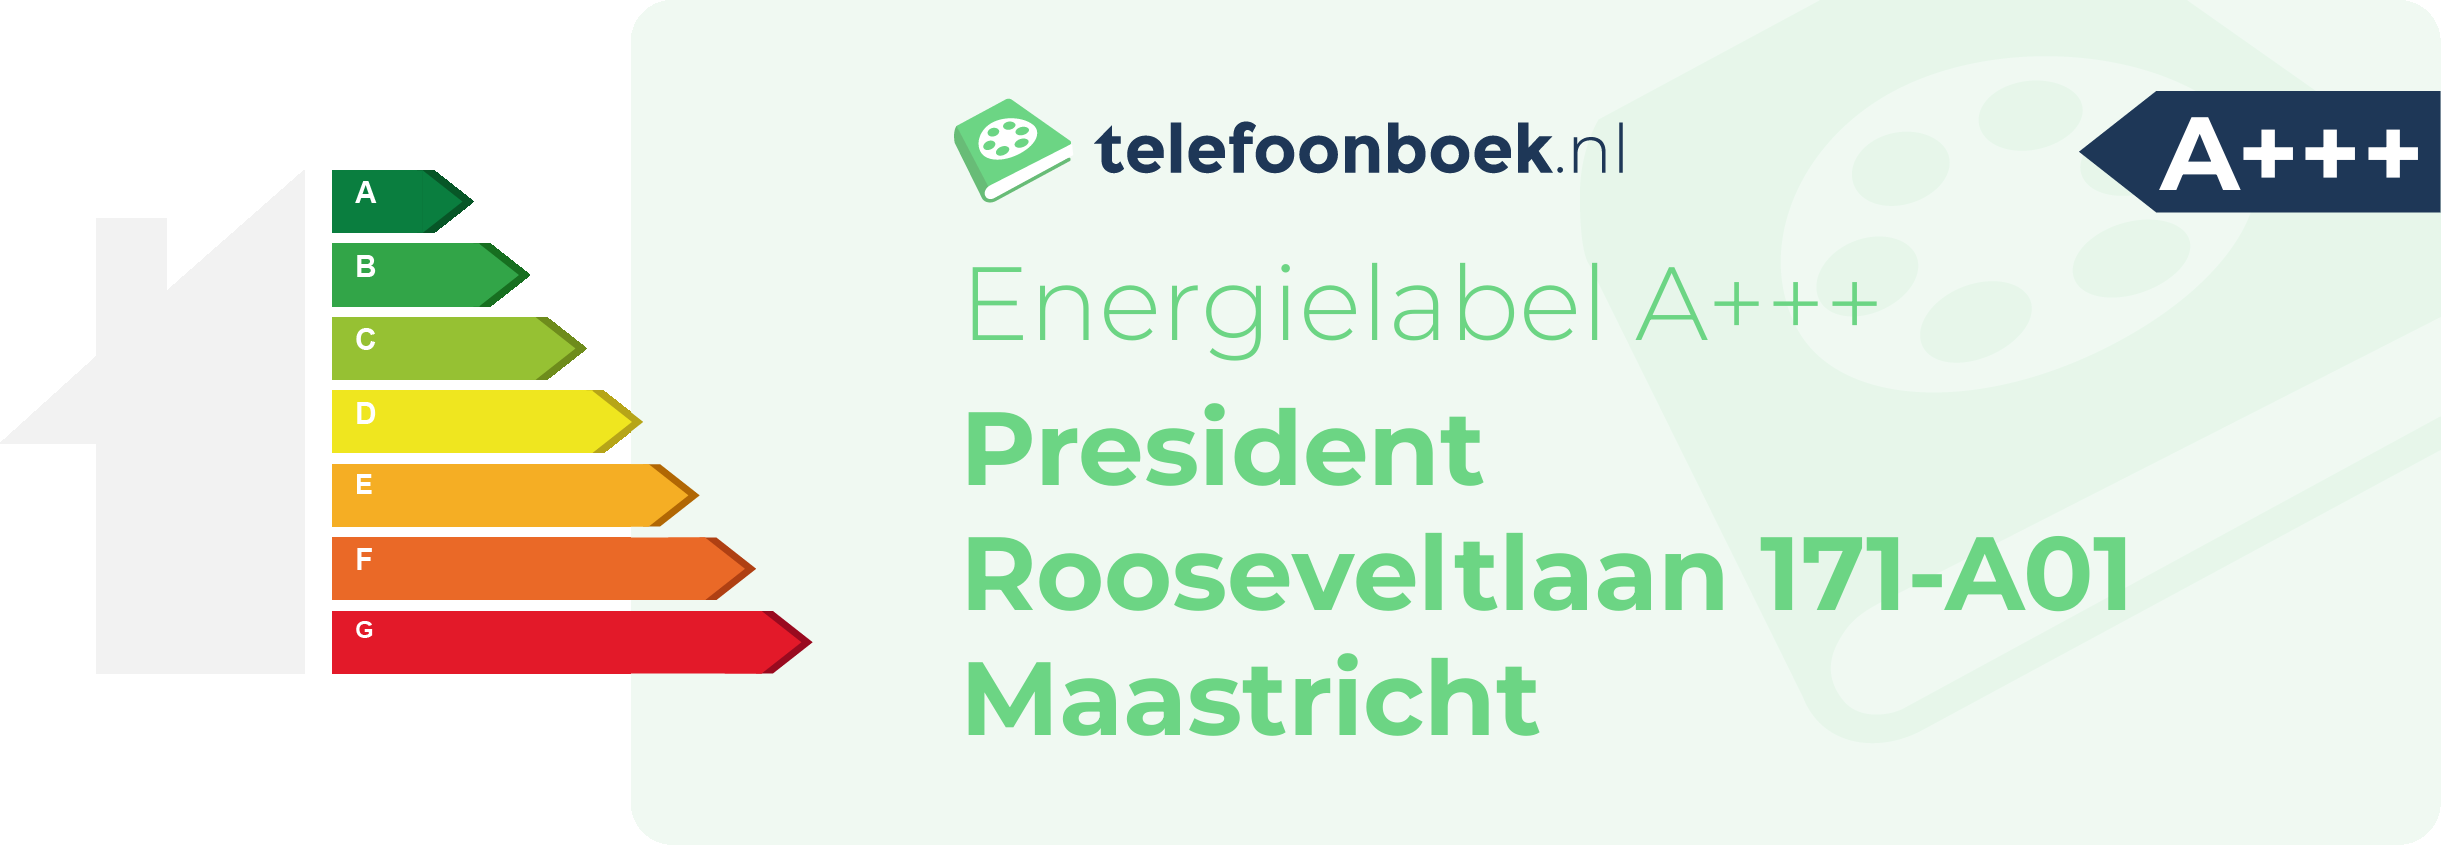 Energielabel President Rooseveltlaan 171-A01 Maastricht